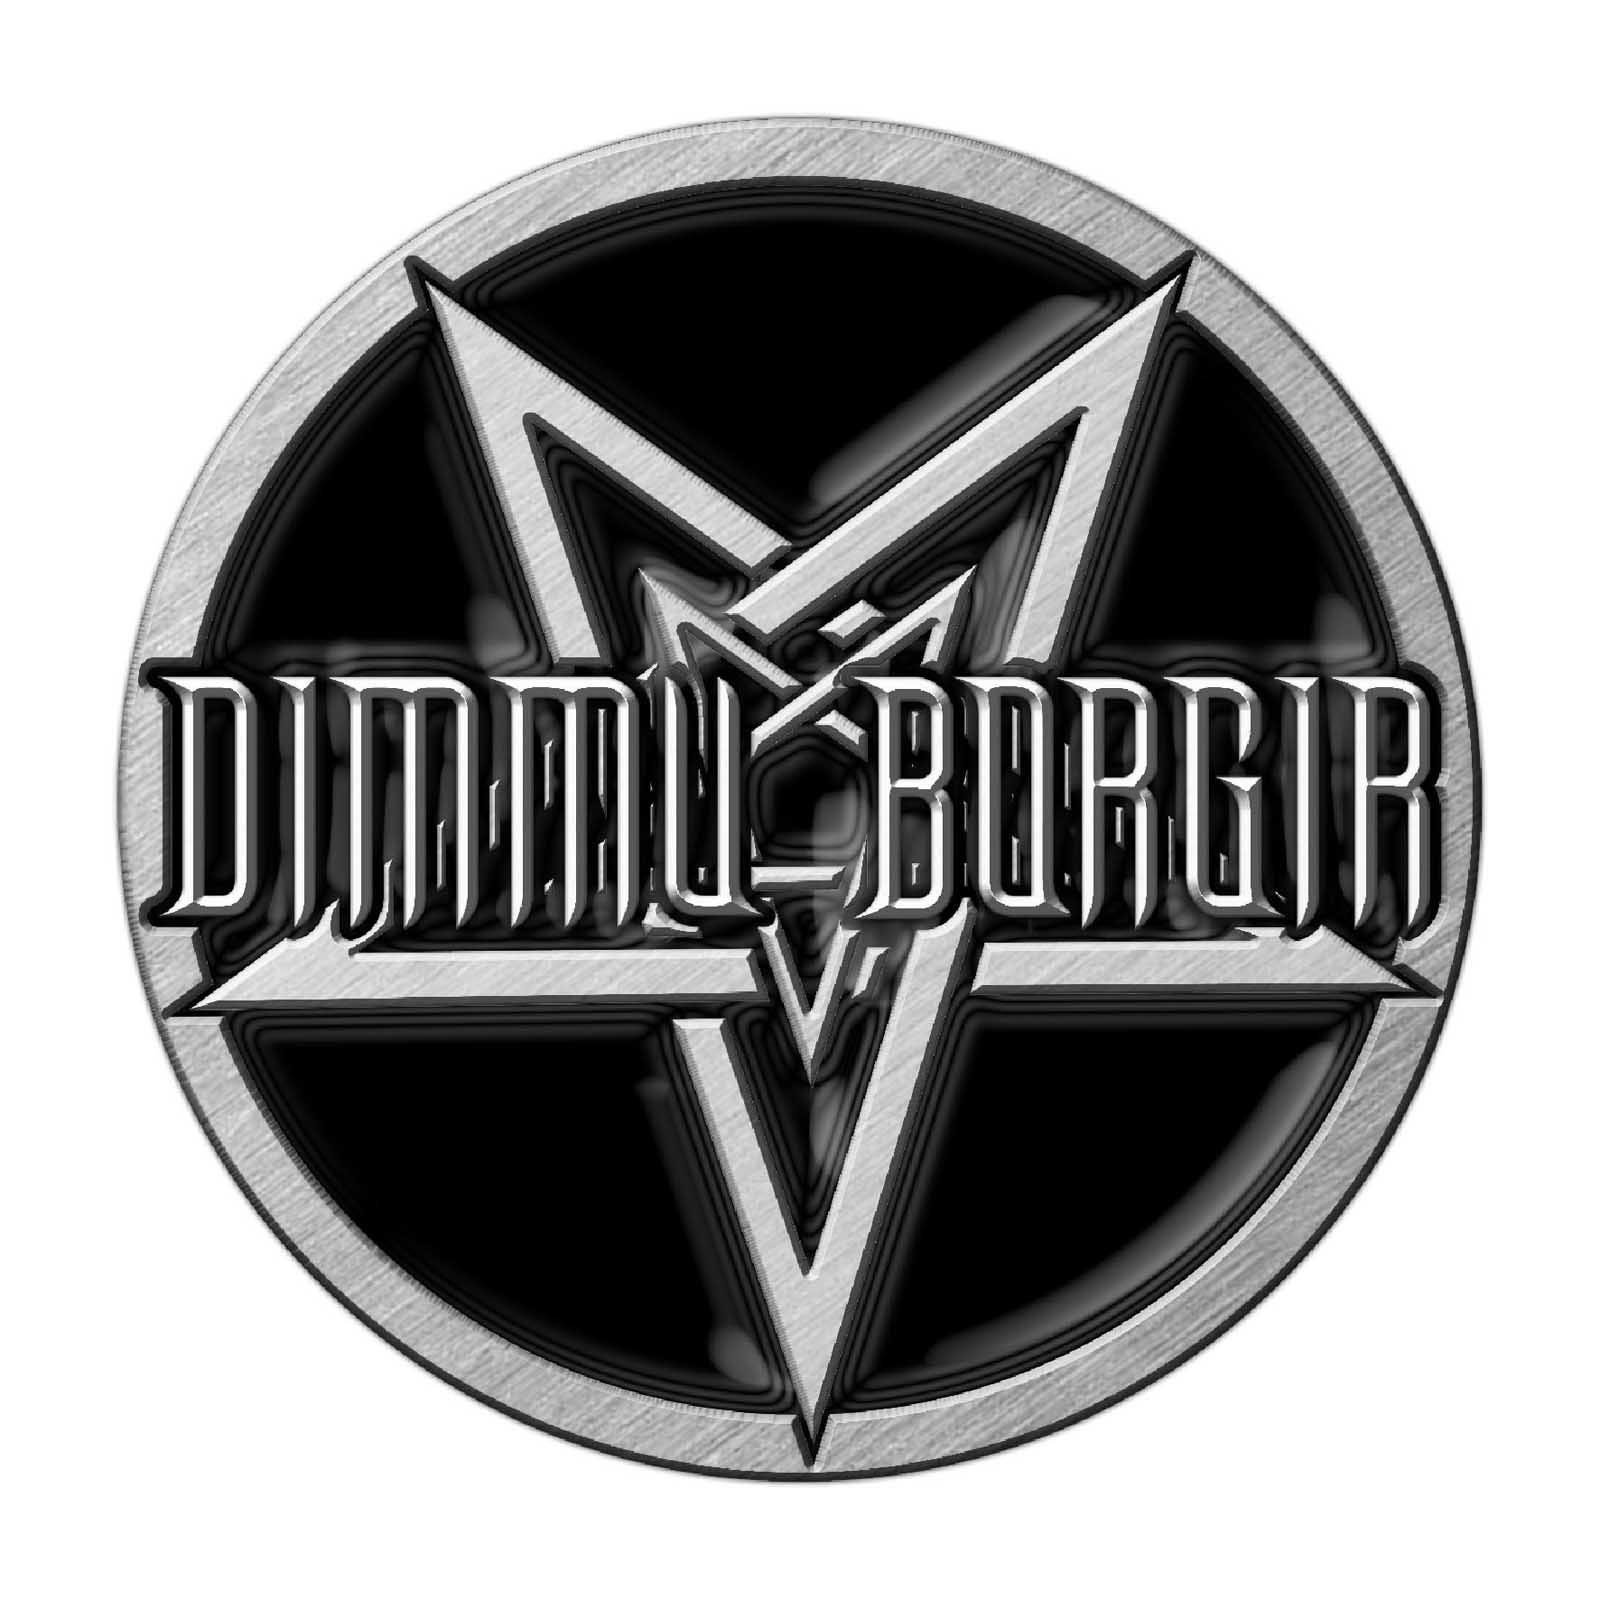 A Black-Metal Christmas Chat With Behemoth, Dimmu Borgir and Cradle of  Filth